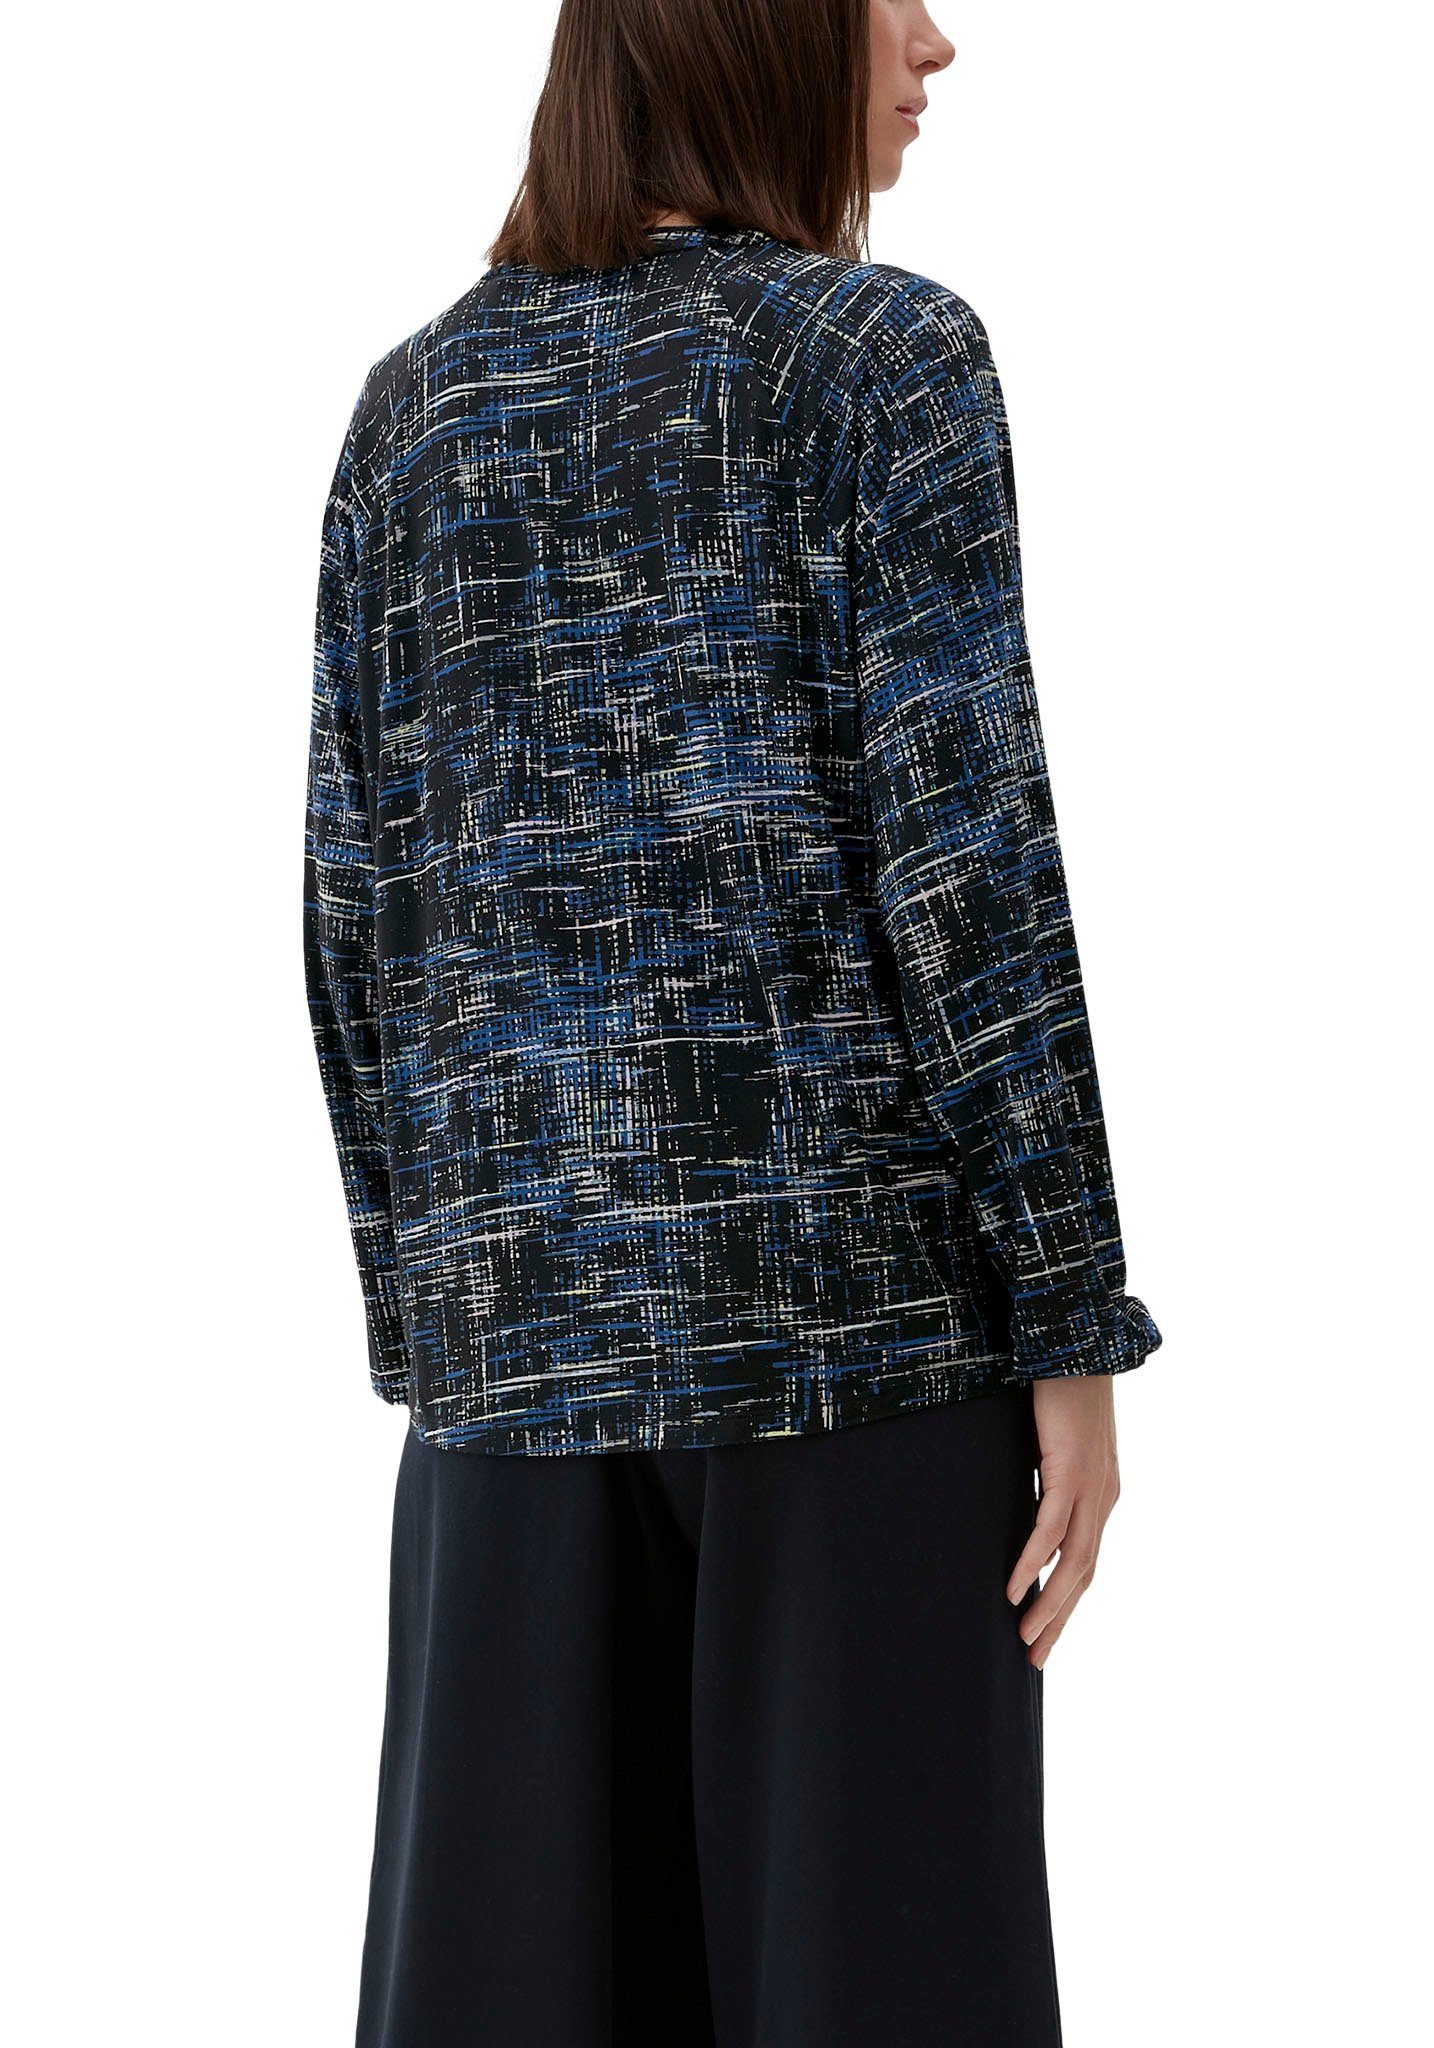 Mehrfarbig Blusenshirt Schwarz Jerseybluse s.Oliver mit Allover-Muster